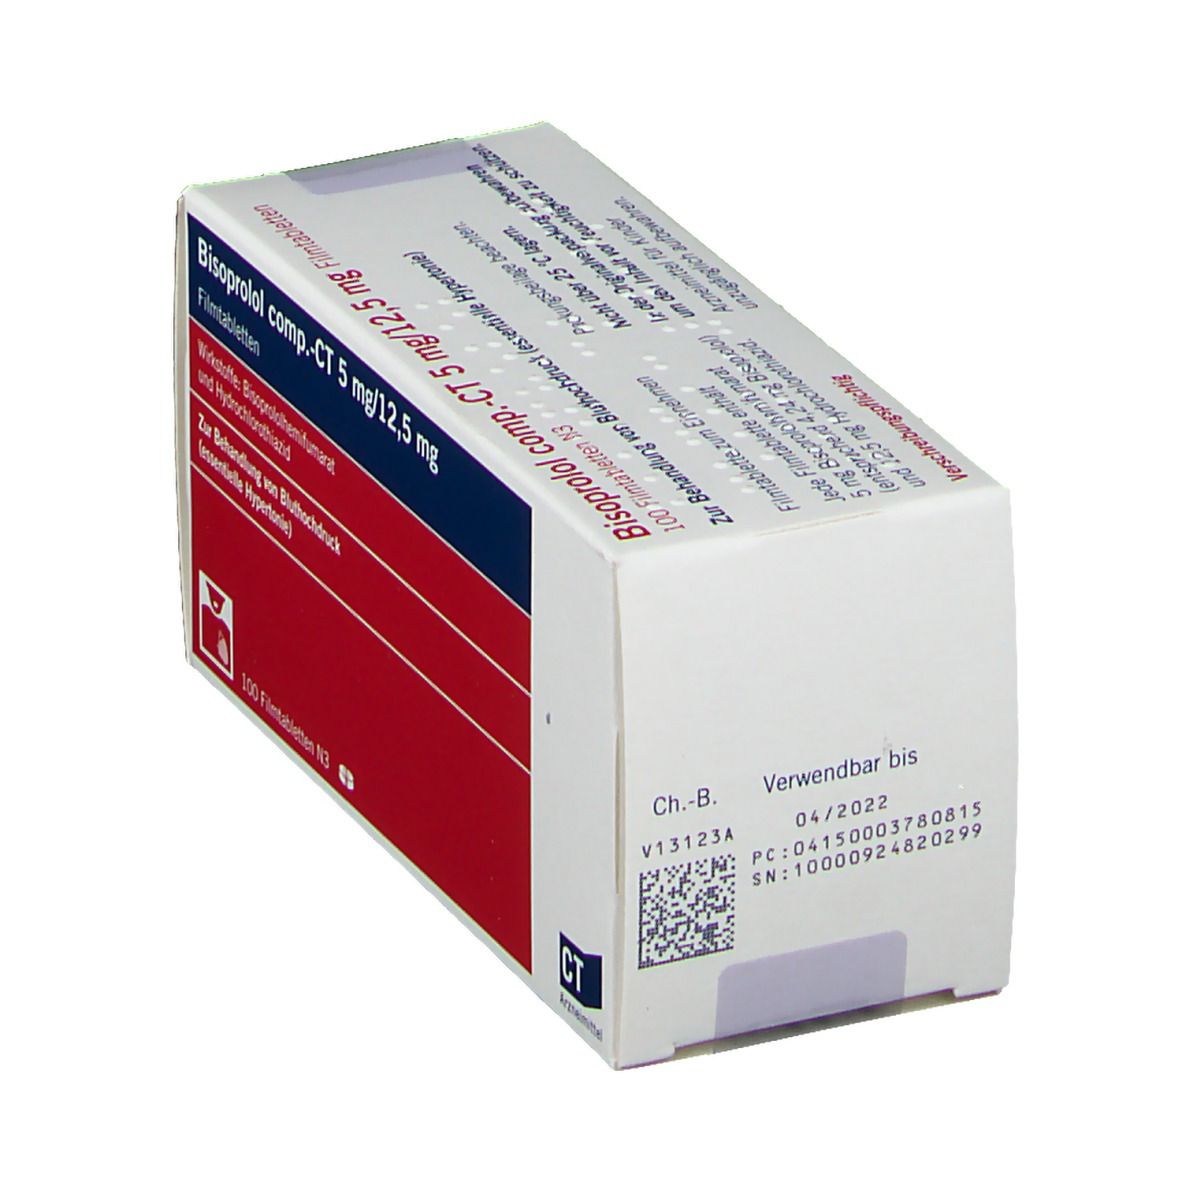 Bisoprolol Comp - Ct5/12.5